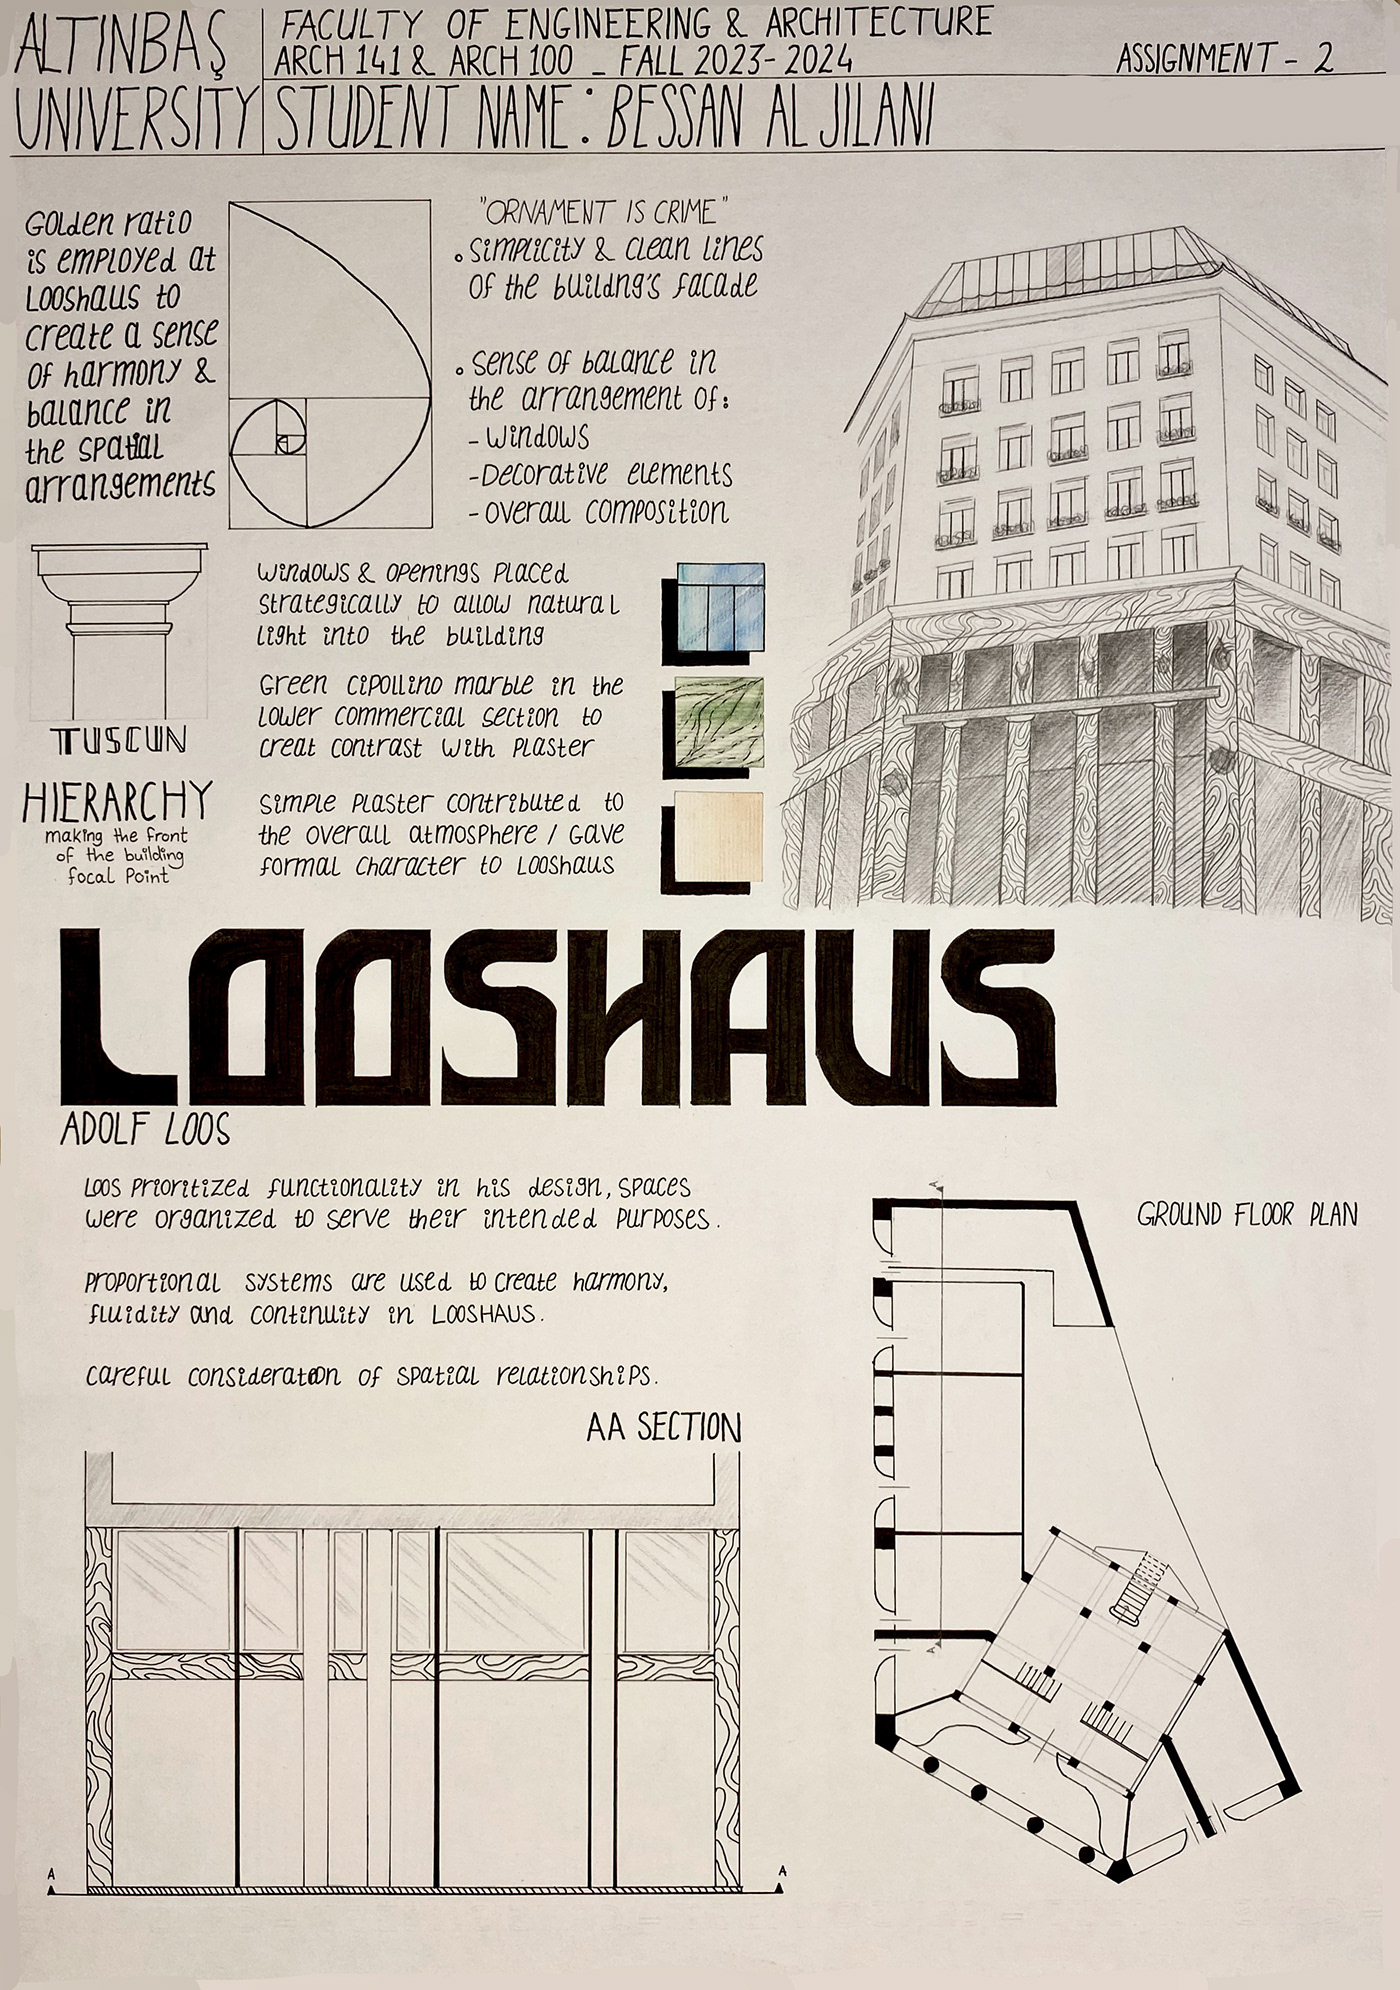 Adolf Loos looshaus student architecture building analysis